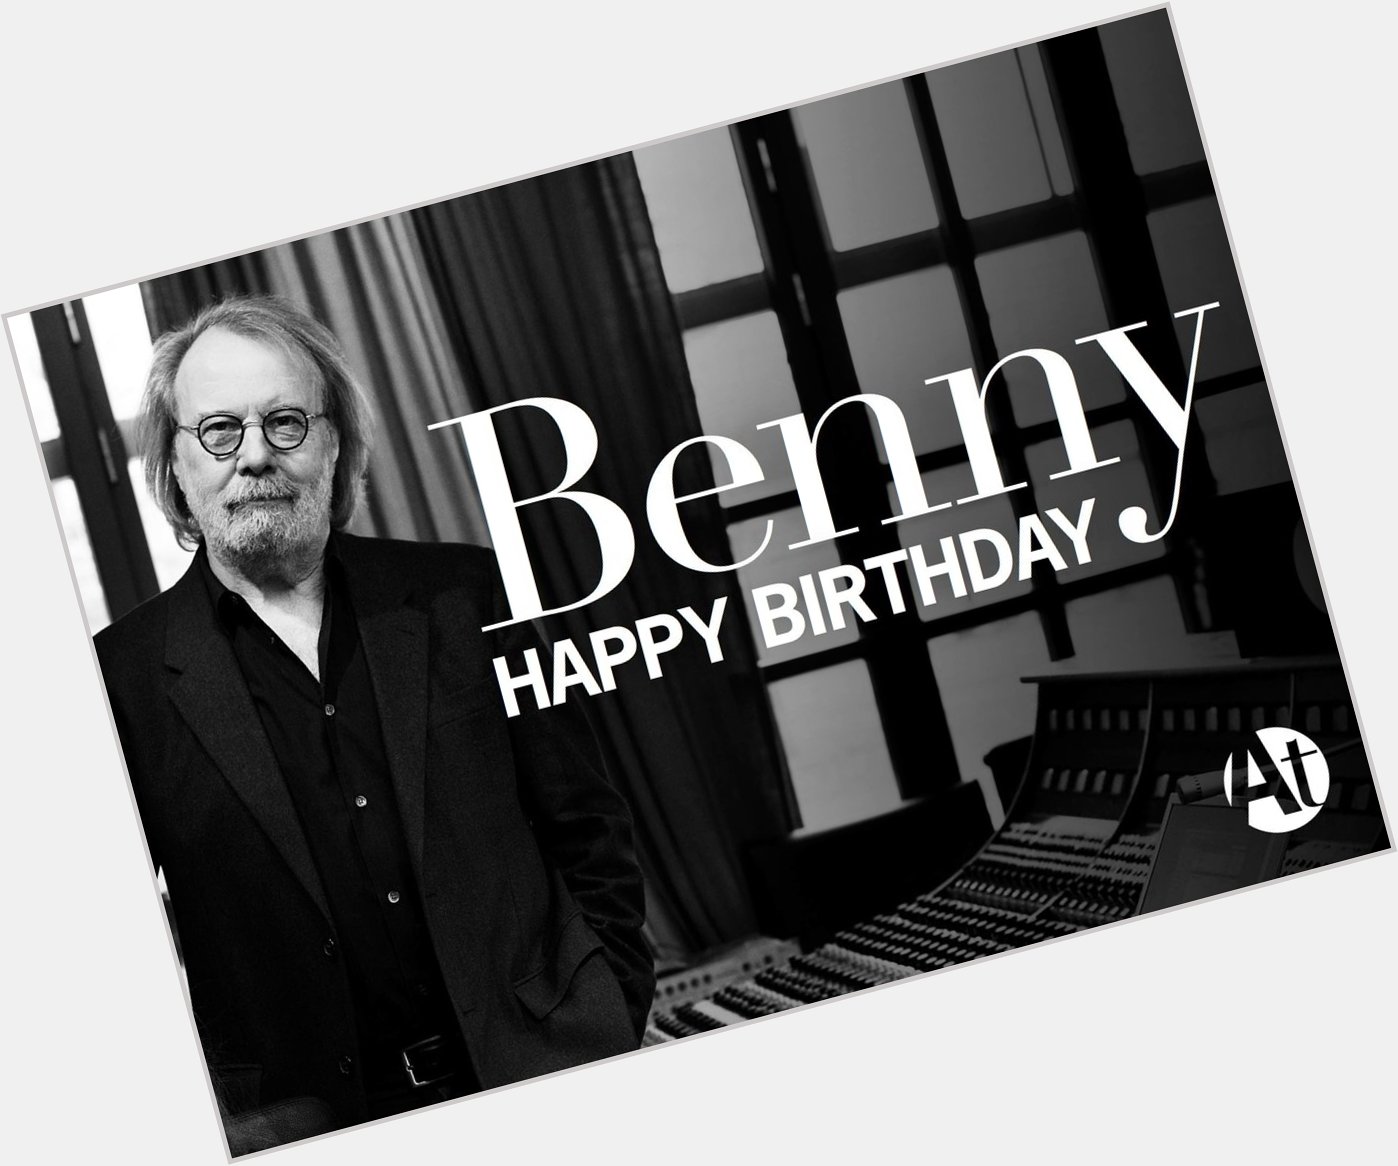 Happy birthday, Benny Andersson!  